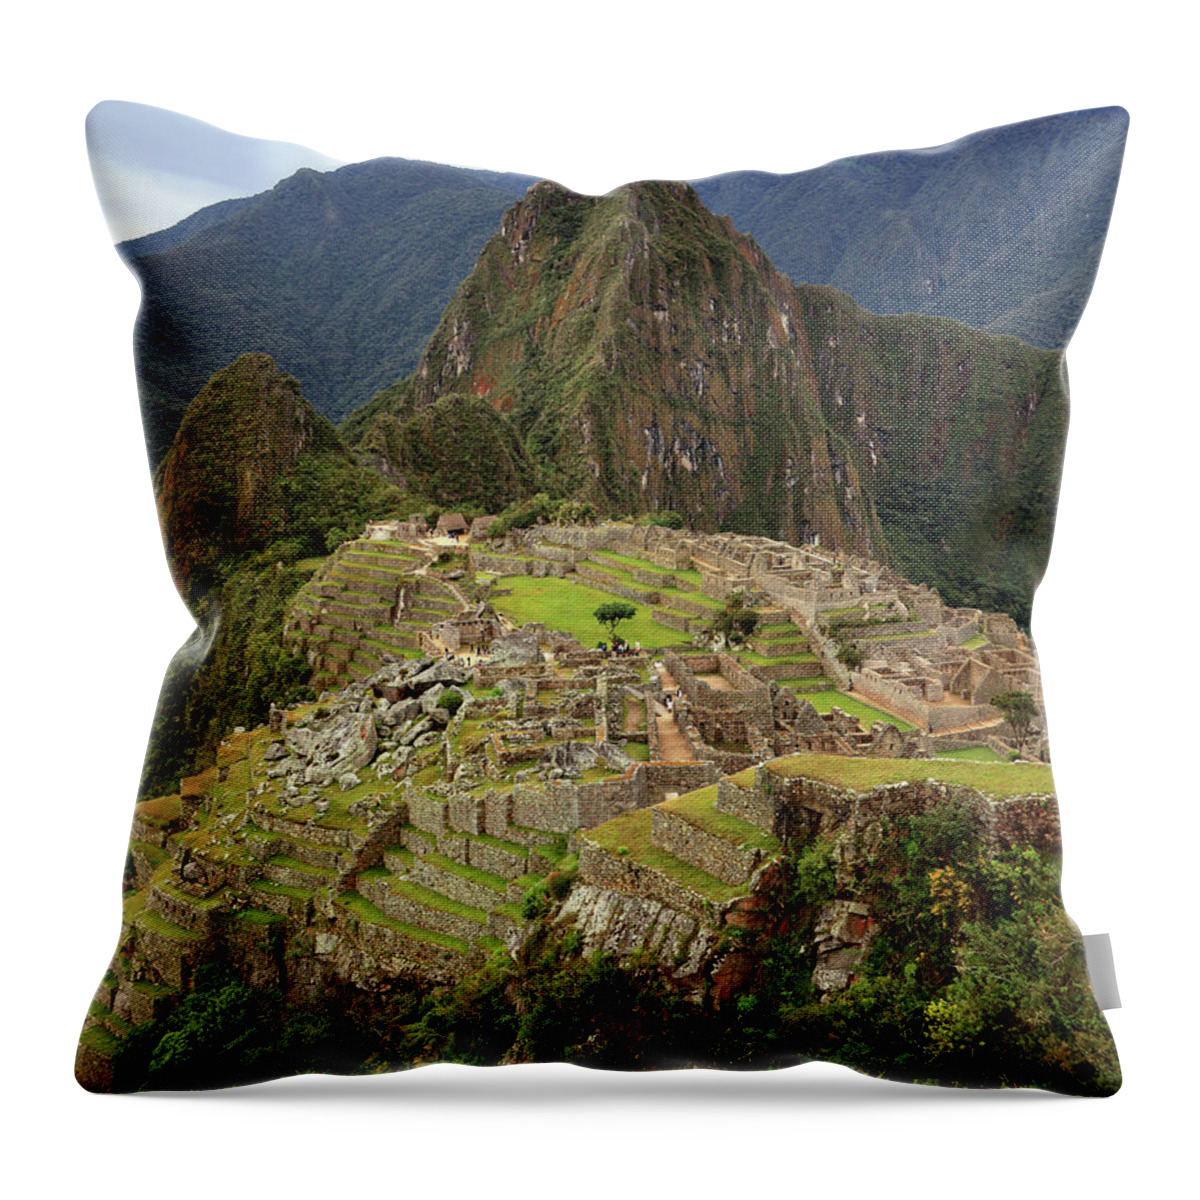 Tranquility Throw Pillow featuring the photograph Machu Picchu Portrait by Rob Kroenert